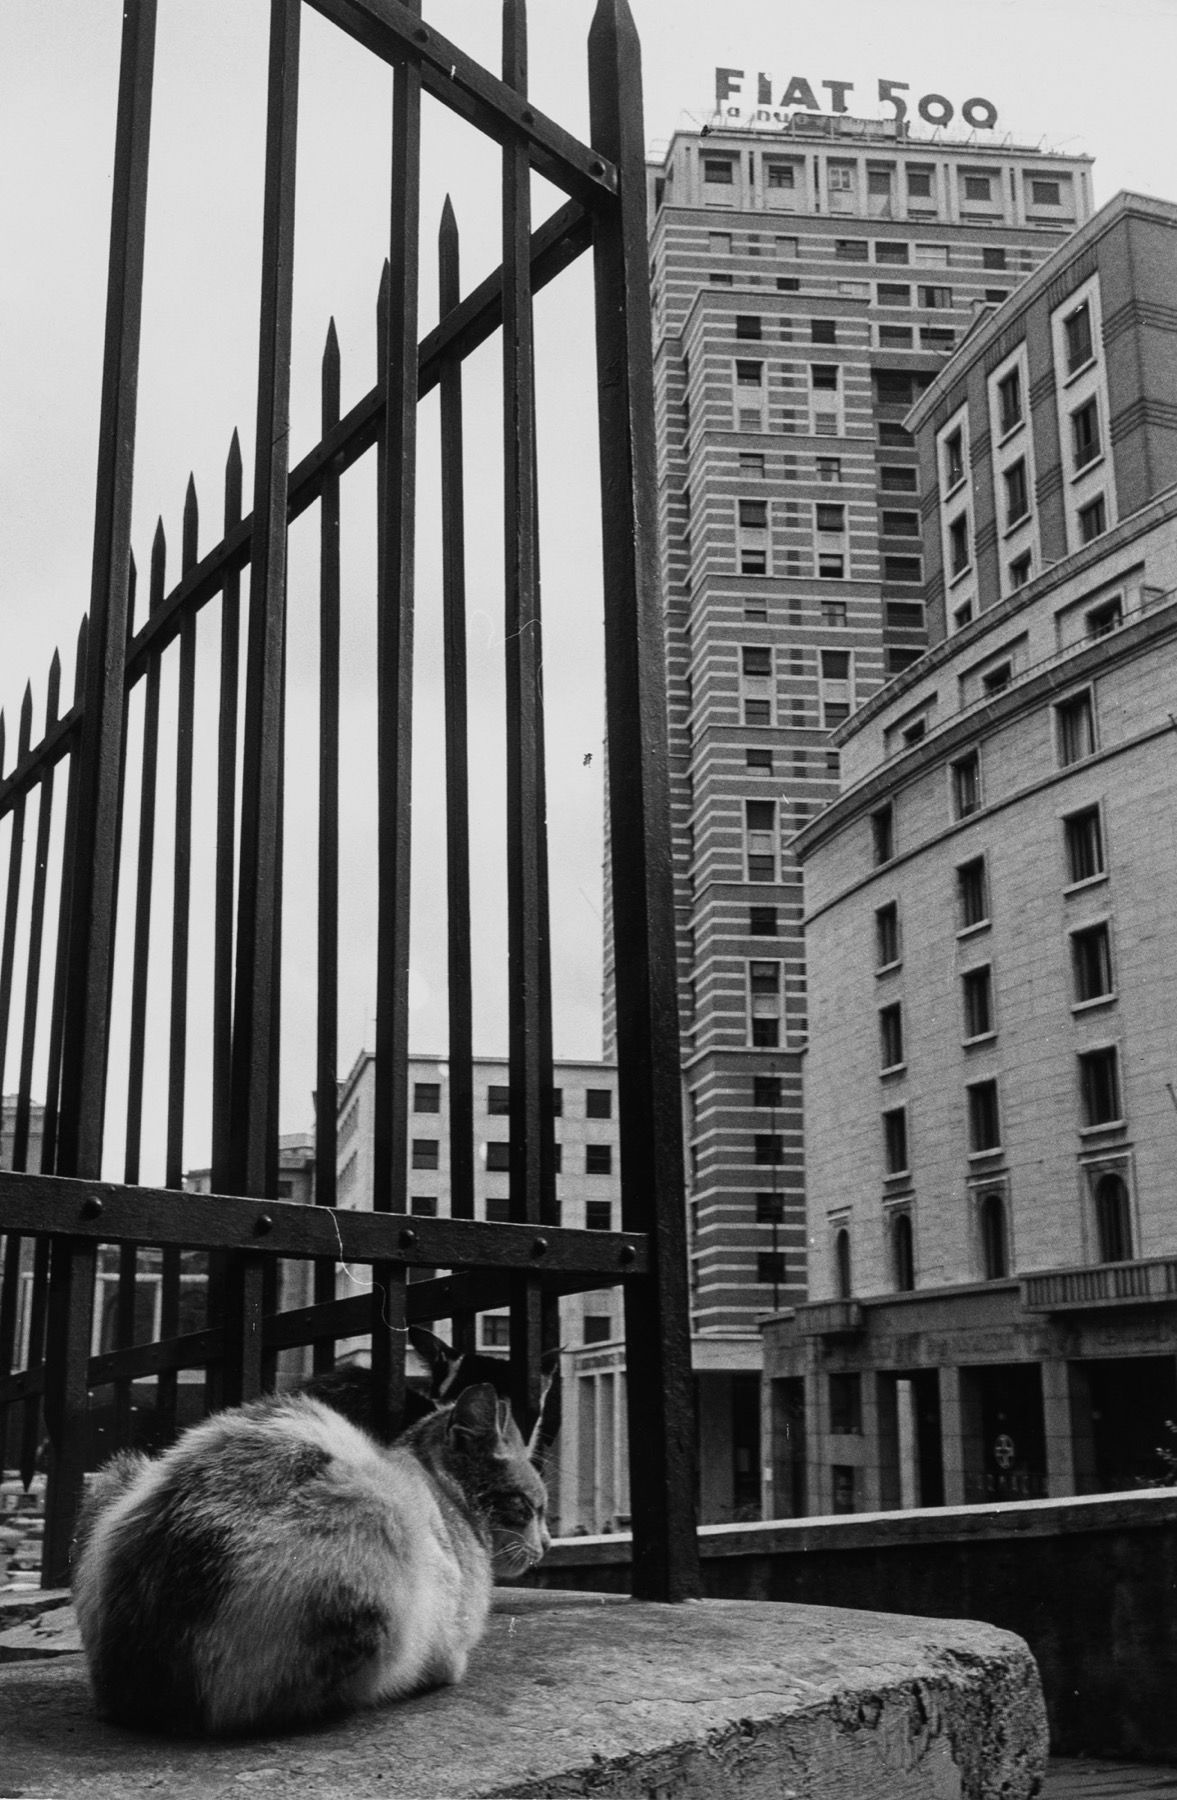 Kurt Blum 热那亚，但丁广场 ，1960年

复古明胶银印刷品
11.6 x 7.7 in.
背面有摄影师的信用印章